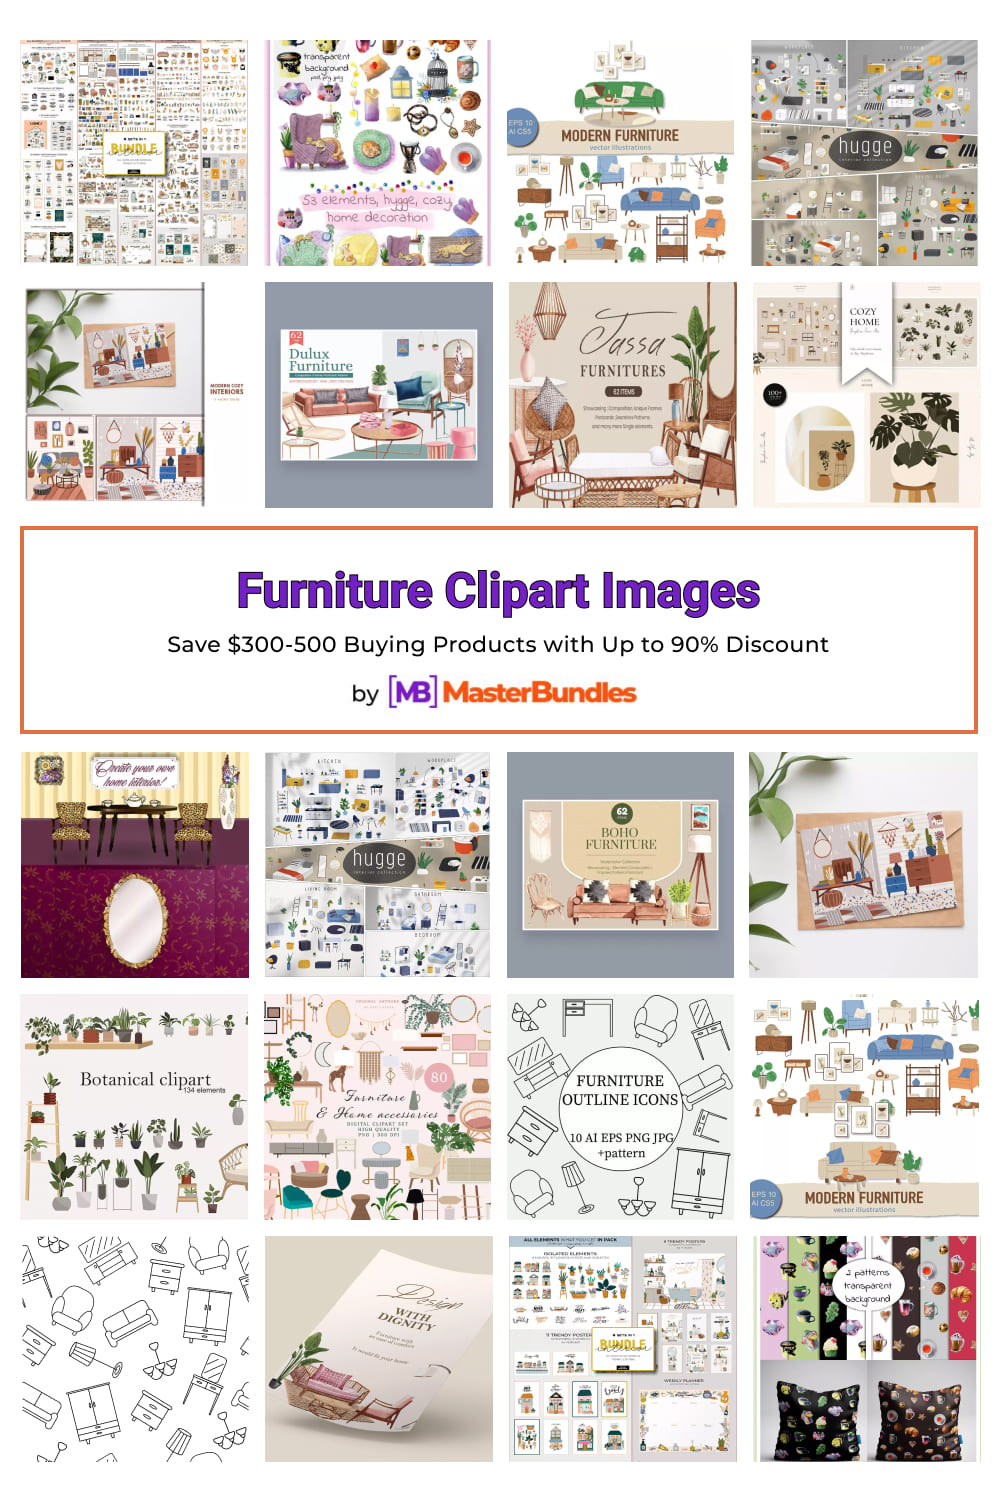 Furniture Clipart Images Pinterest image.